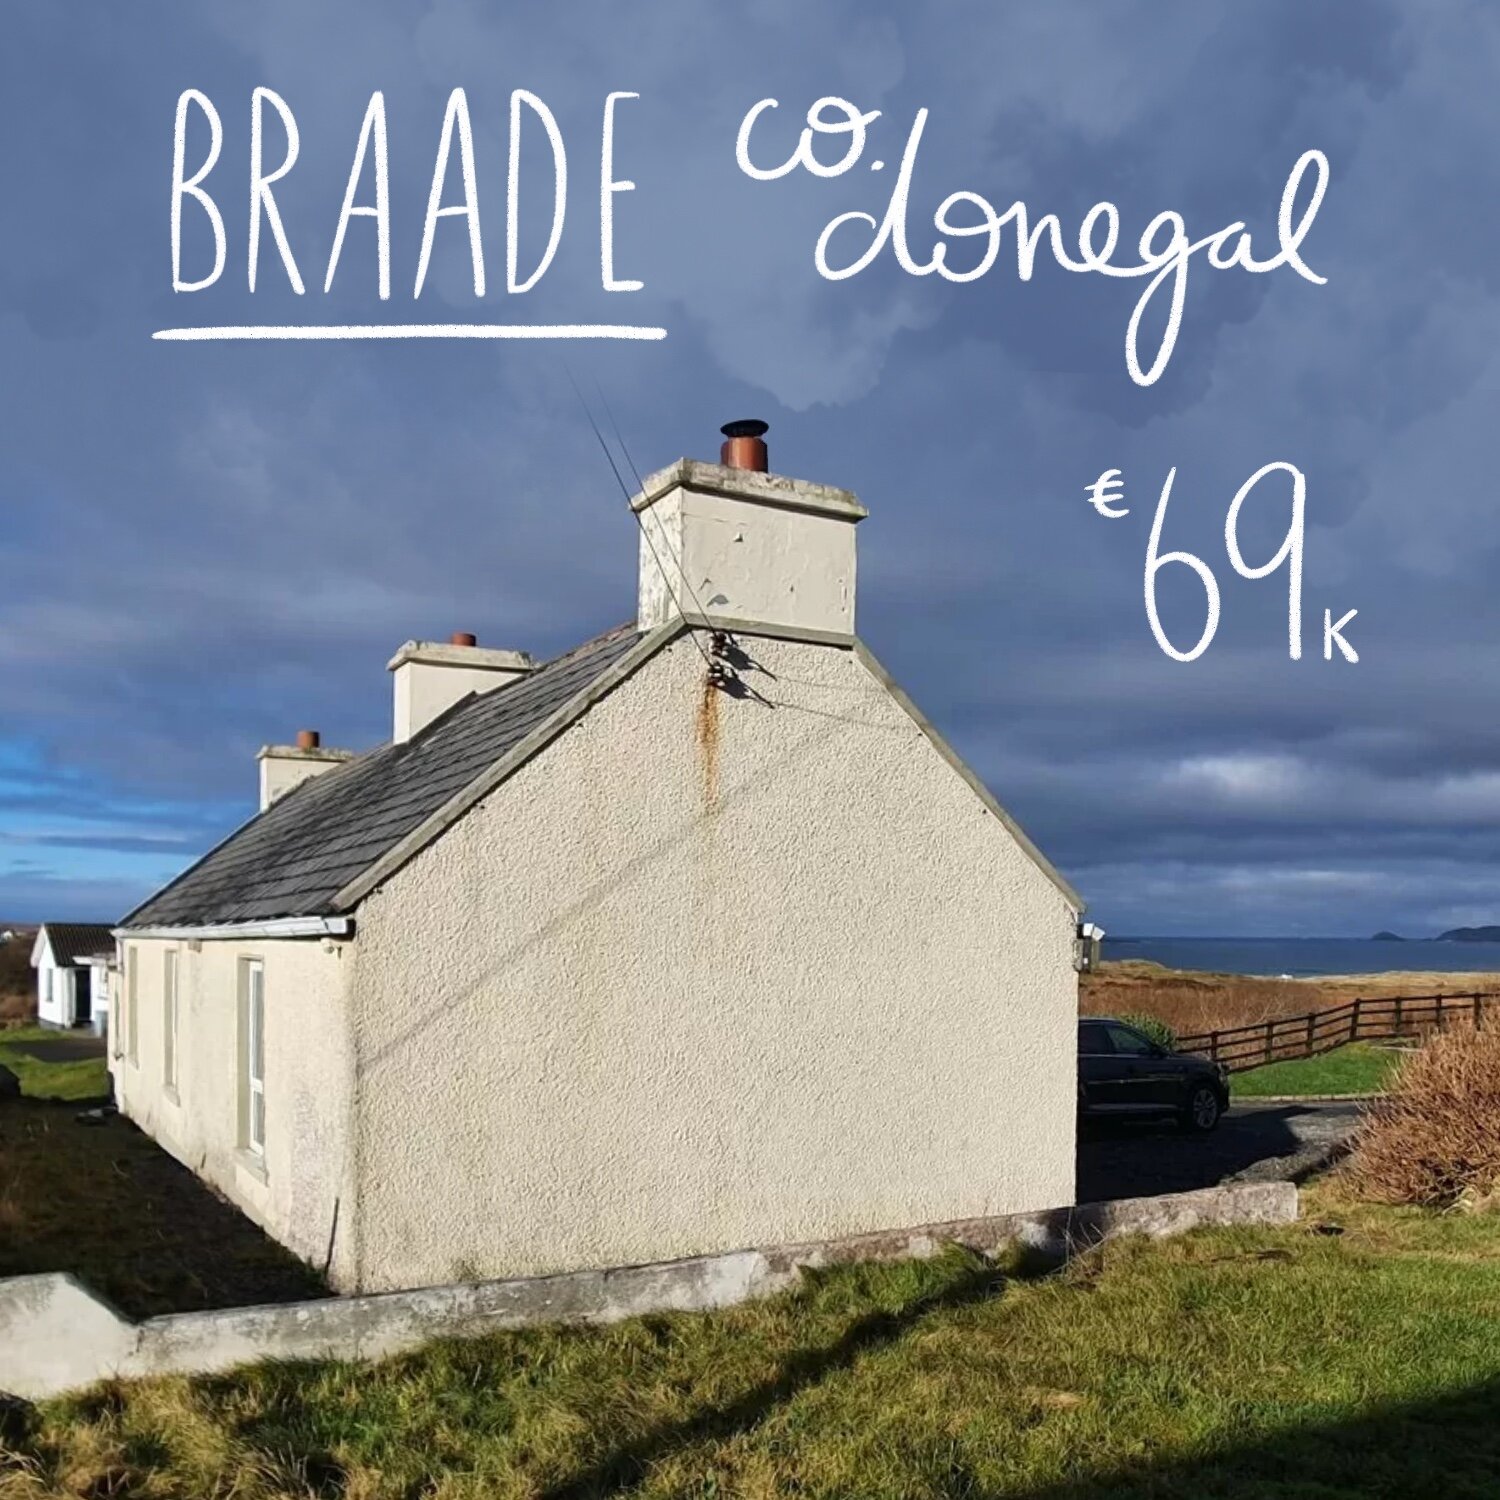 Braade, Kincasslagh, Co. Donegal. €69k